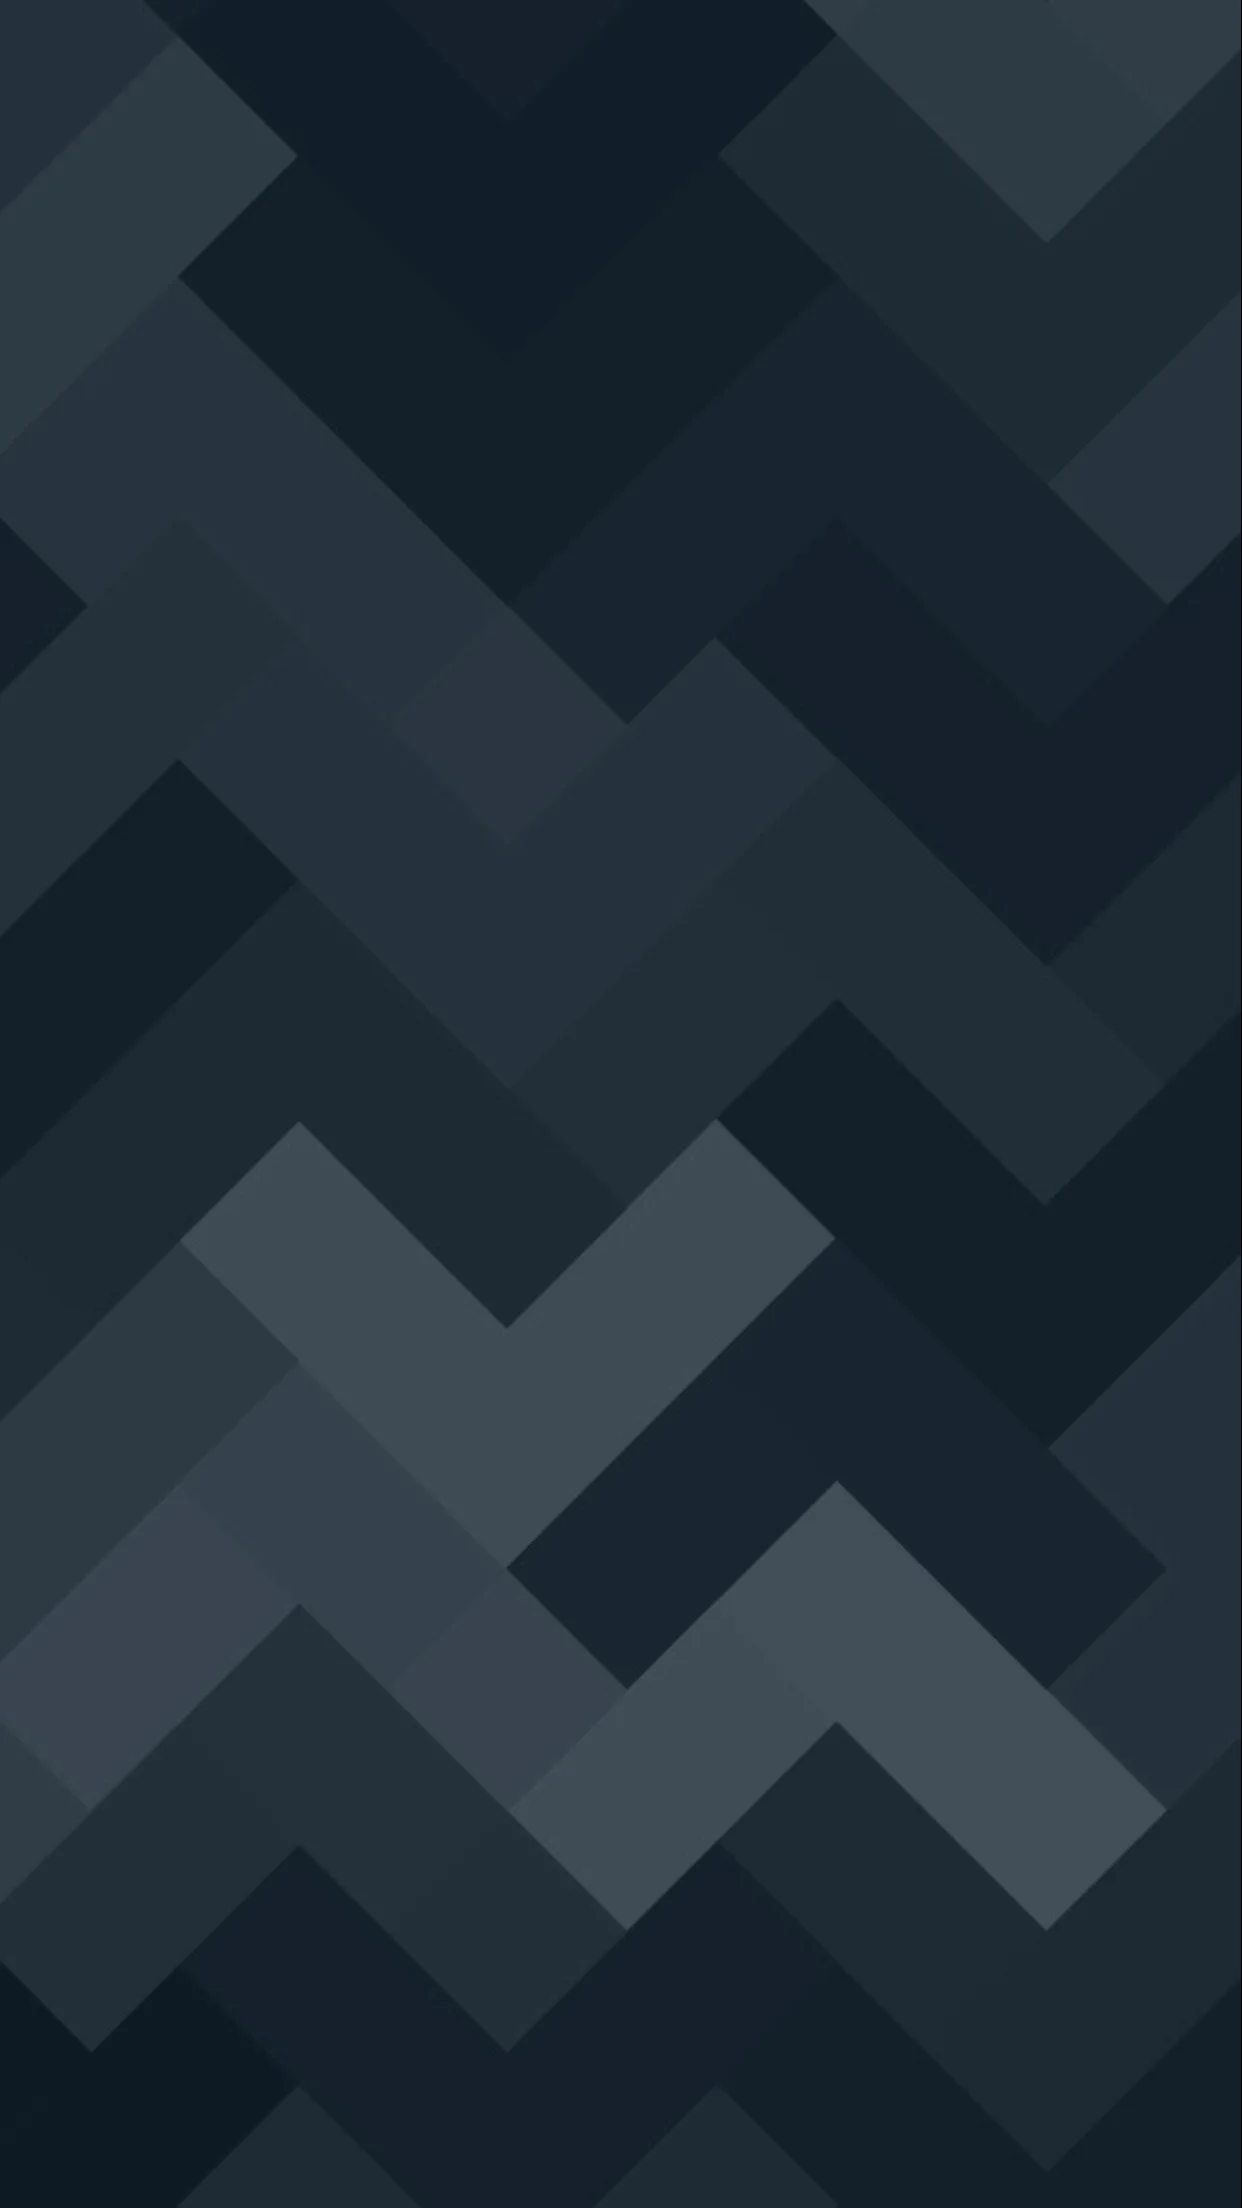 33 Abstract Geometric iPhone Wallpapers  WallpaperSafari